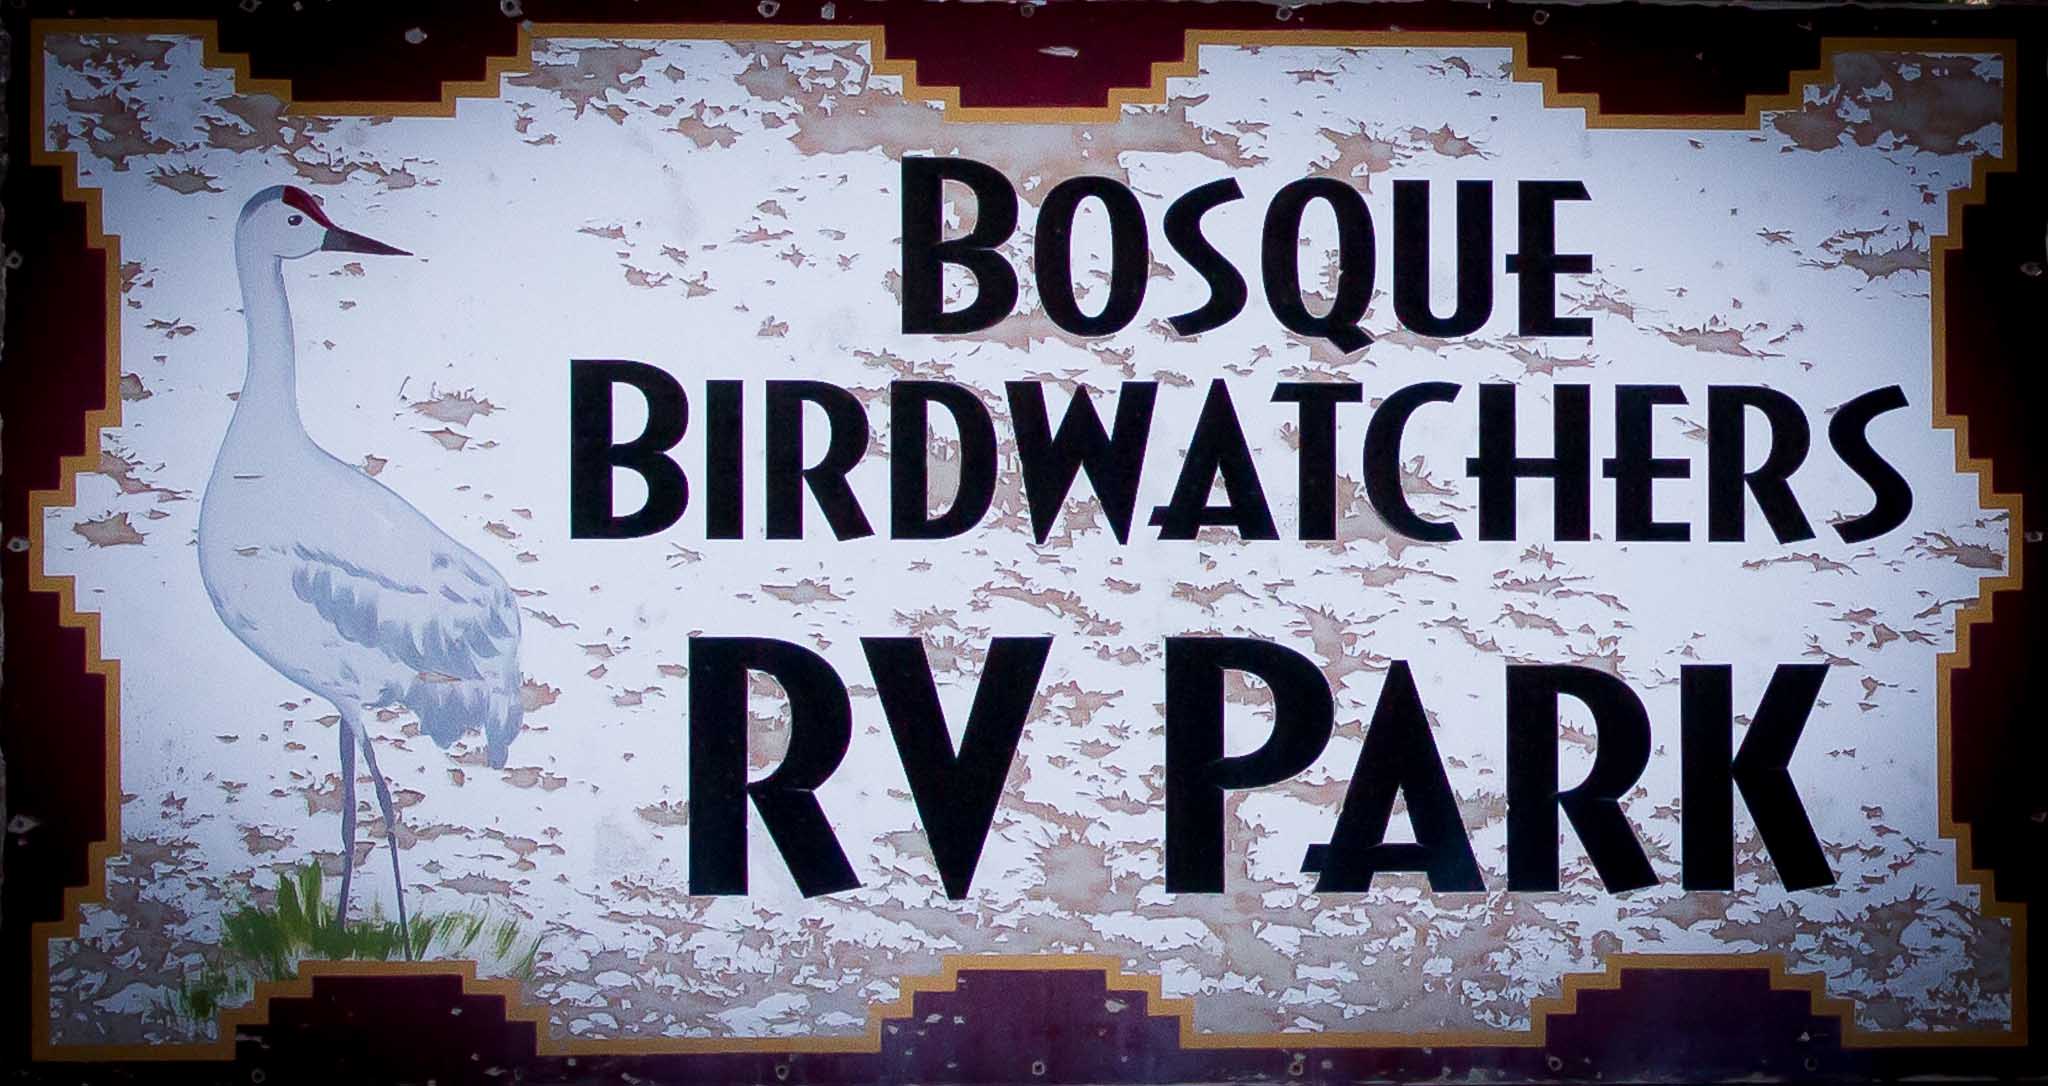 Bosque Birdwatchers RV Park sign